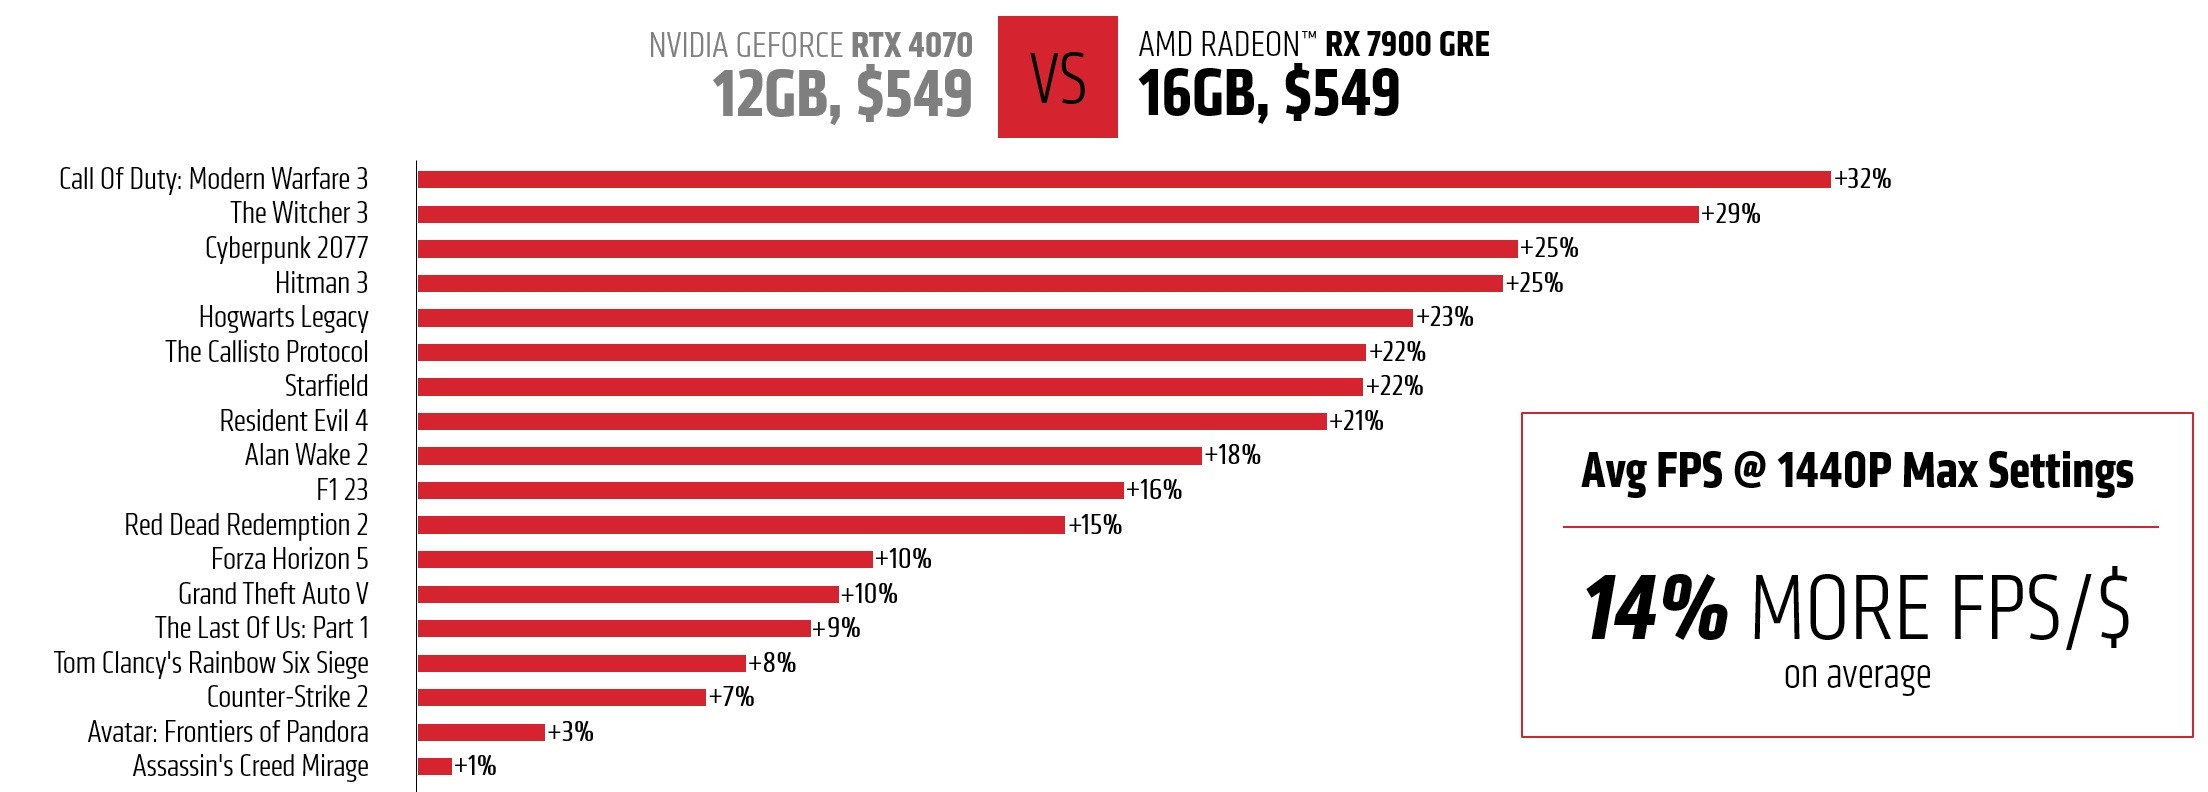 AMD Radeon RX 7900 GRE performances